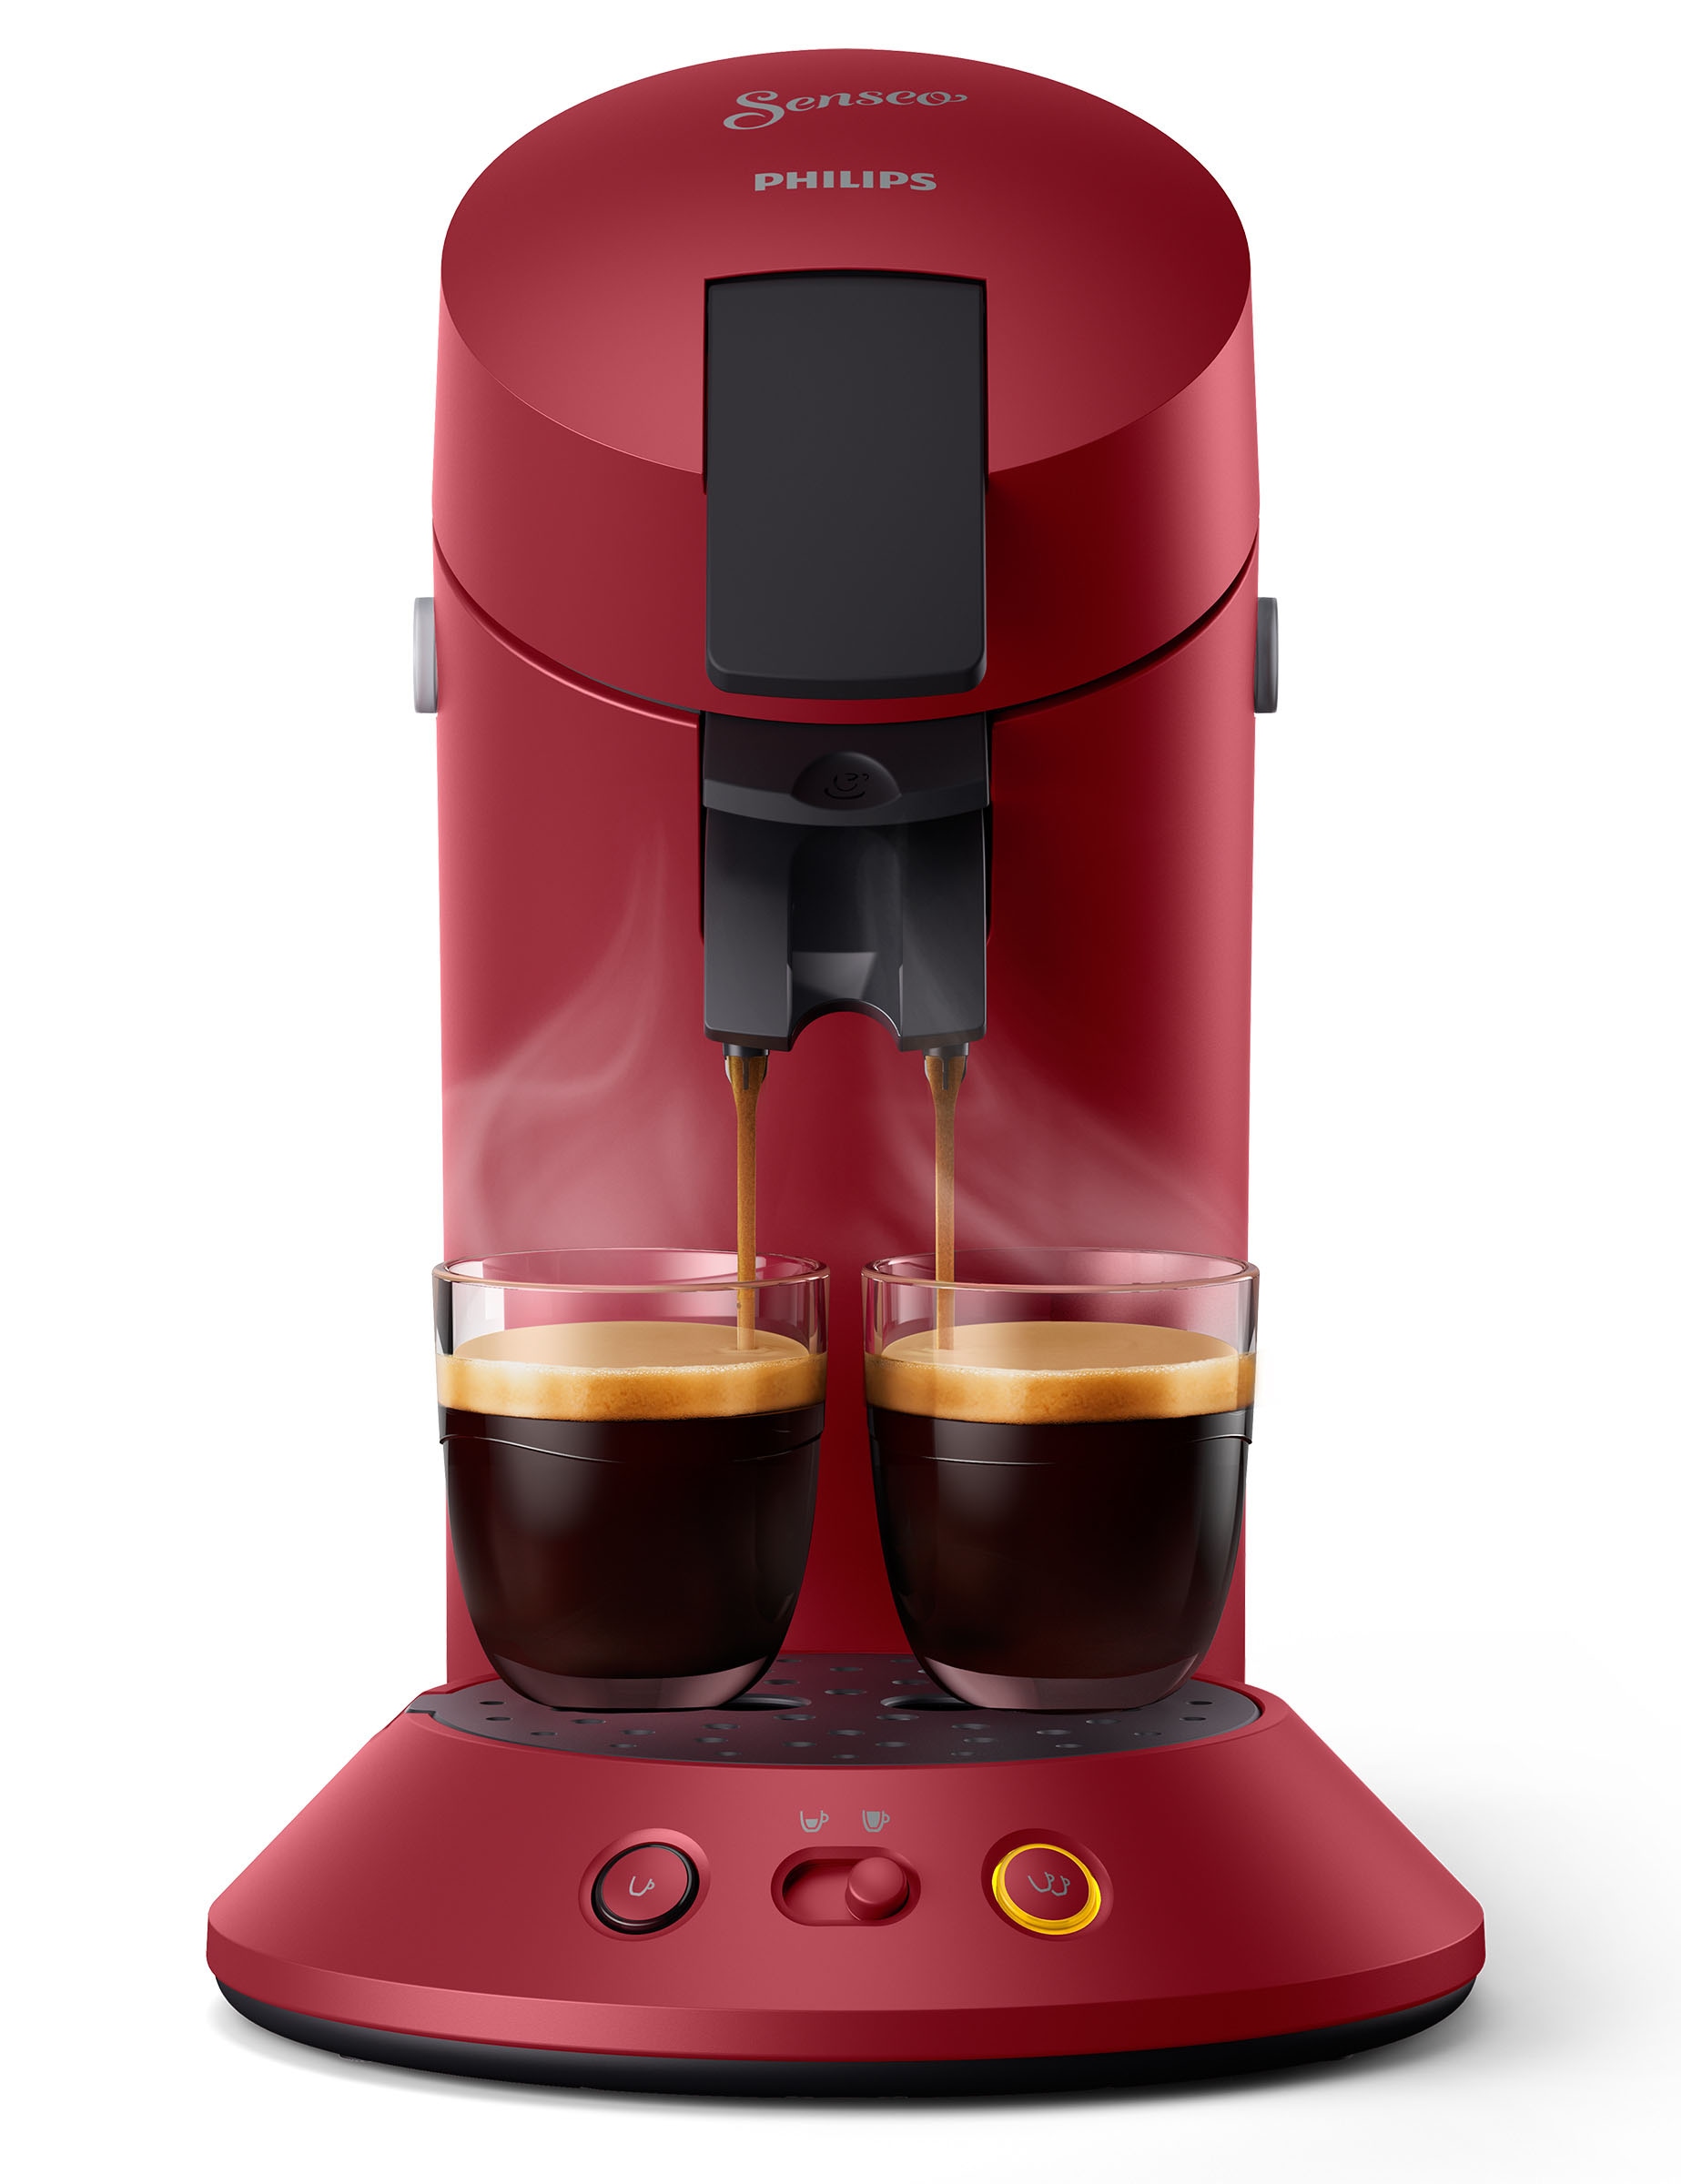 Philips Senseo Kaffeepadmaschine »Orginal Plus CSA210/90«, aus 28% recyceltem Plastik und mit 2 Kaffeespezialitäten, dunkelrot